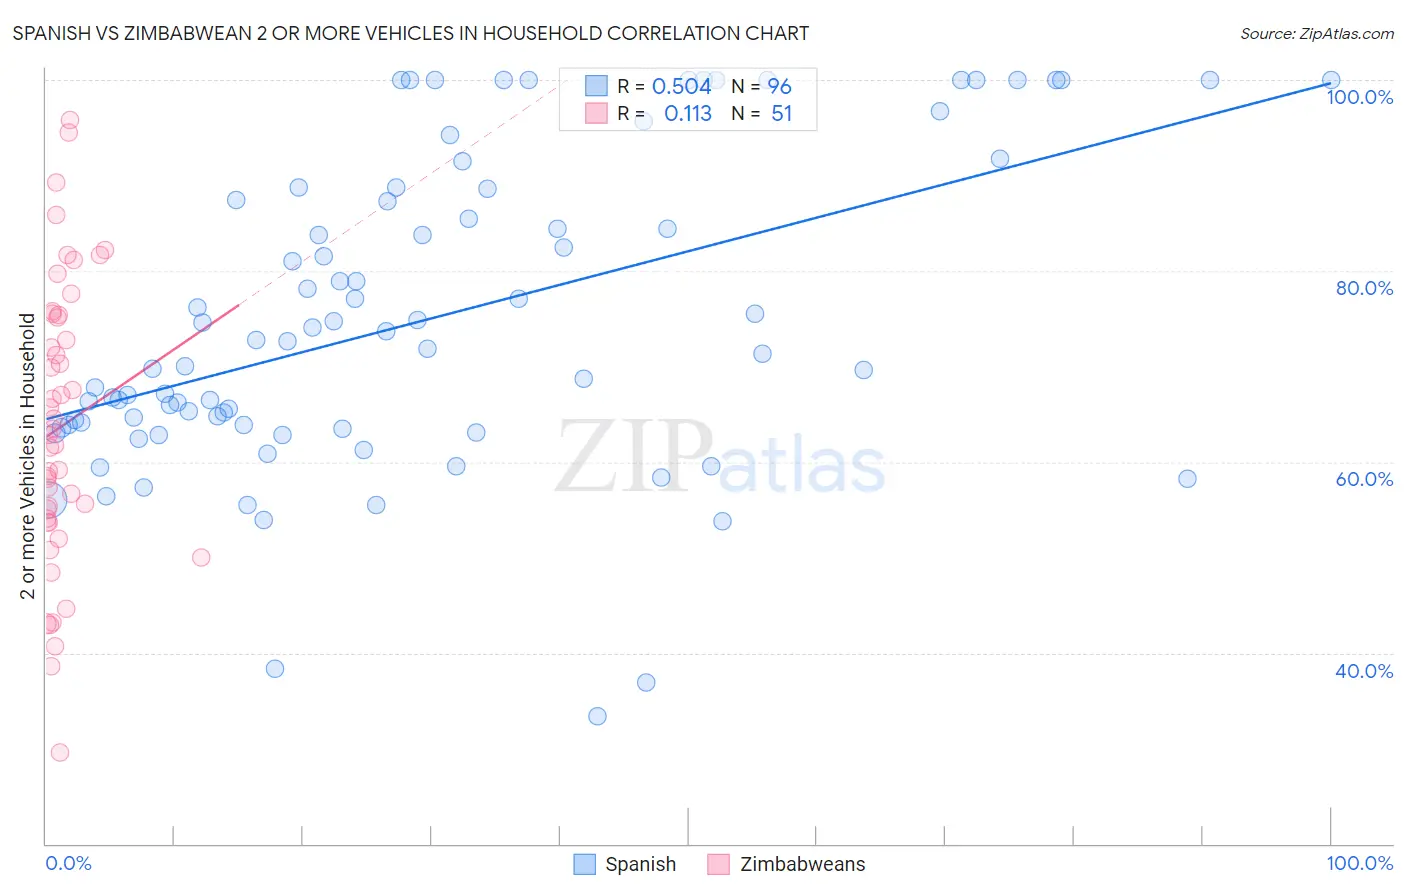 Spanish vs Zimbabwean 2 or more Vehicles in Household